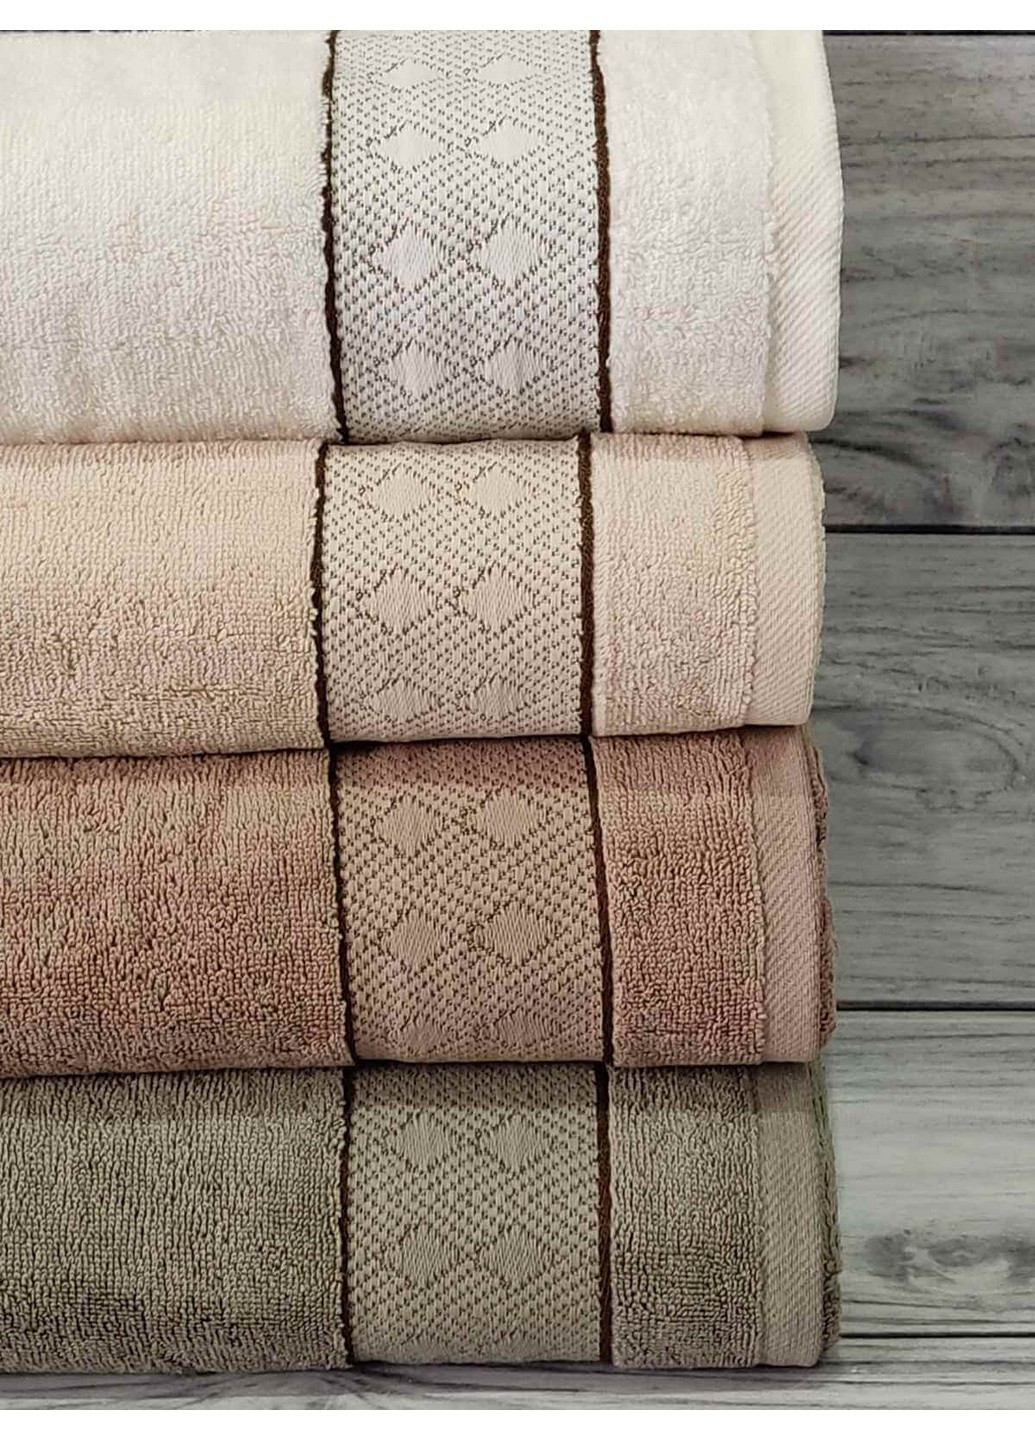 Sikel набор жаккардовых полотенцев для ванной penye side (4 штуки). 50х90 см комбинированный производство - Турция